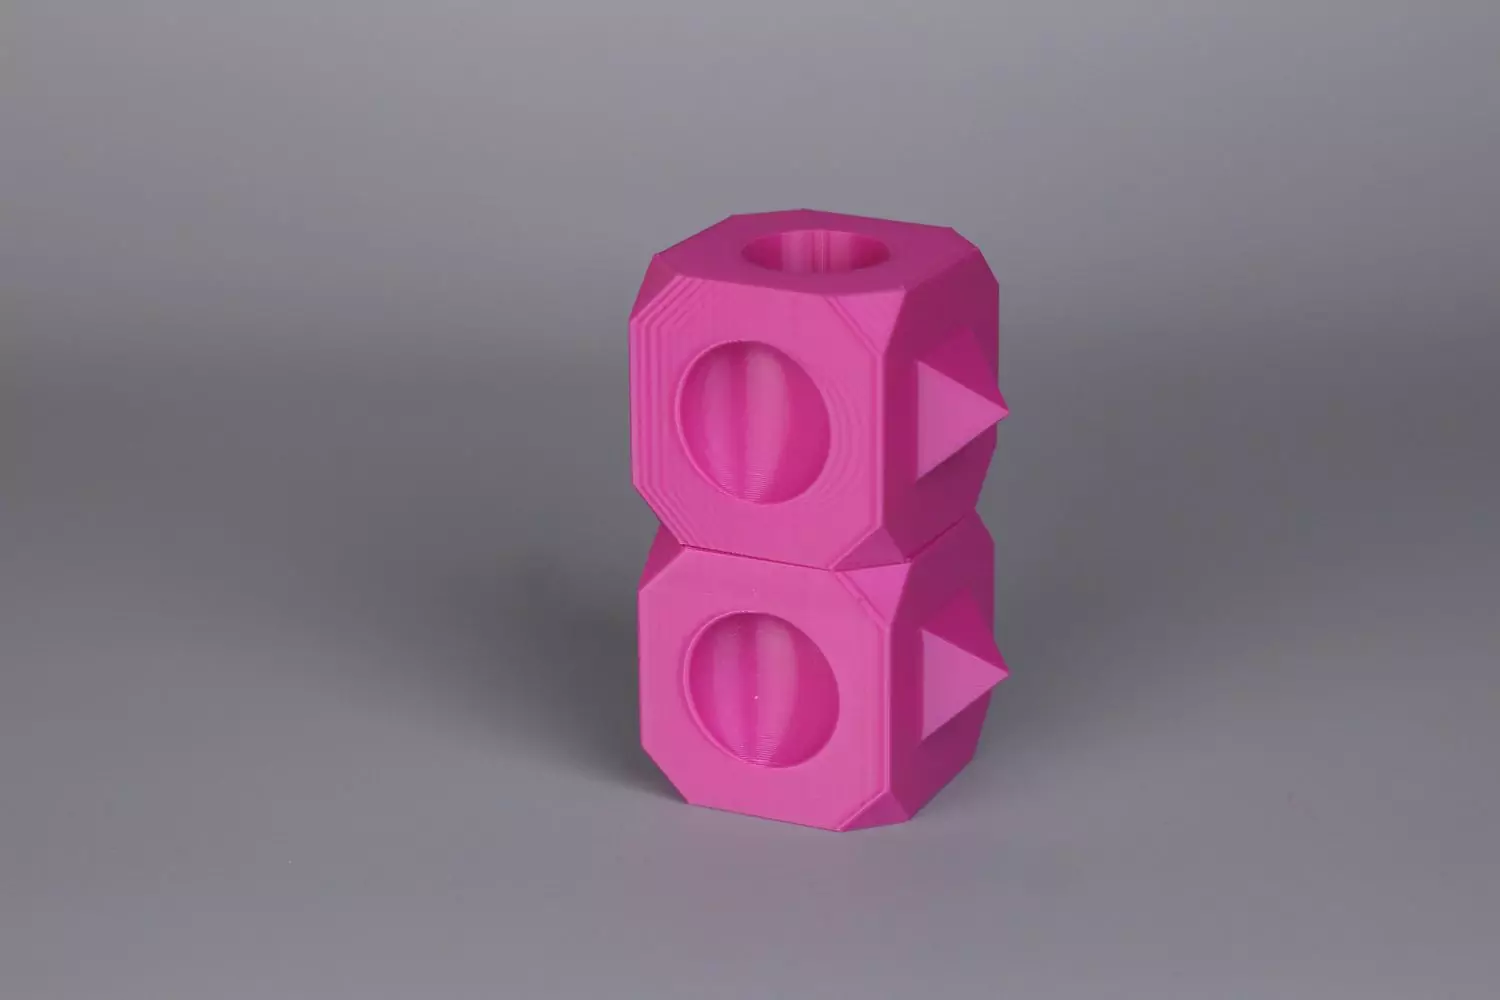 Zaribo Calibration Cube printed on BIQU Hurakan3 | BIQU Hurakan Review: Klipper Firmware on a Budget